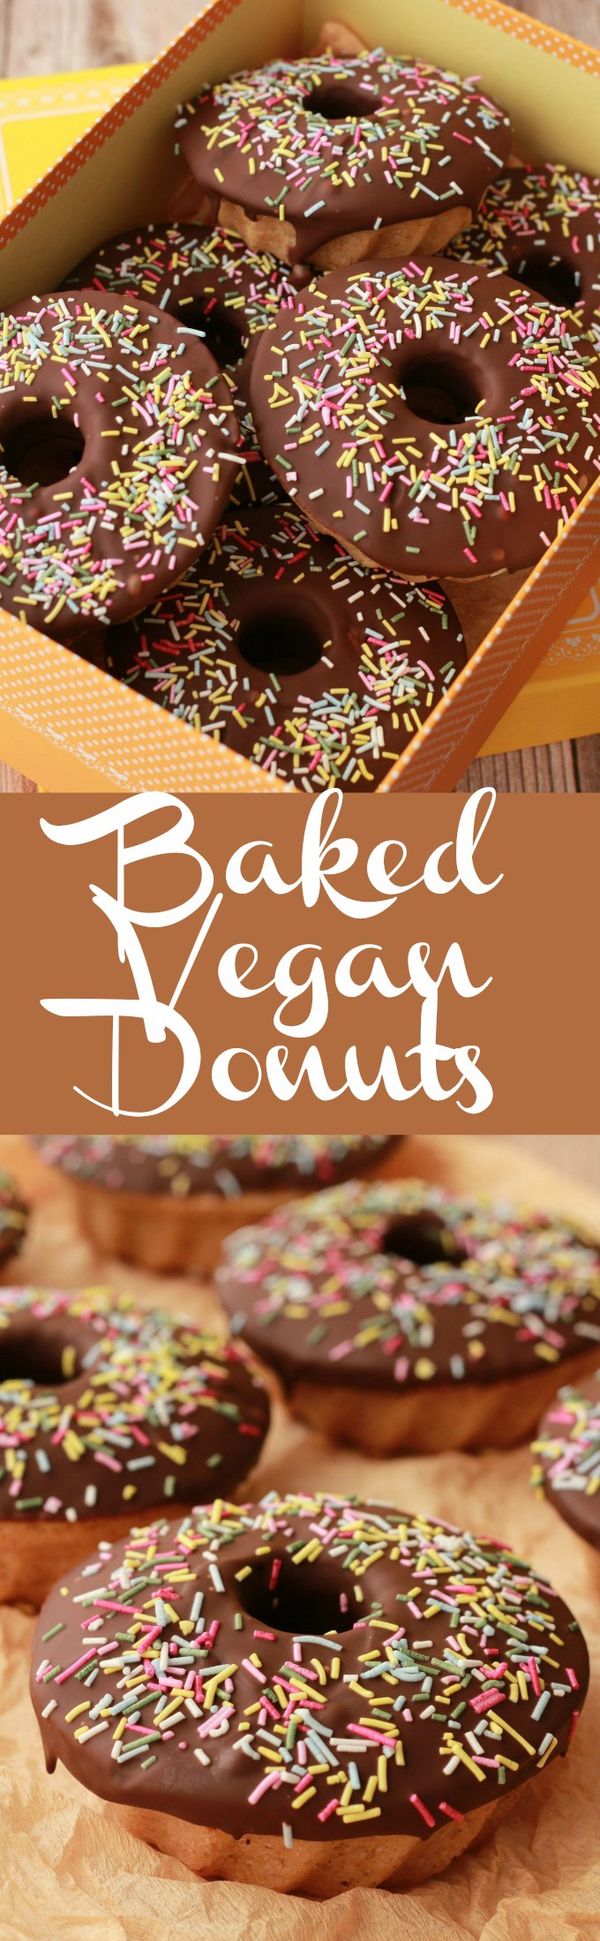 Baked Vegan Donuts